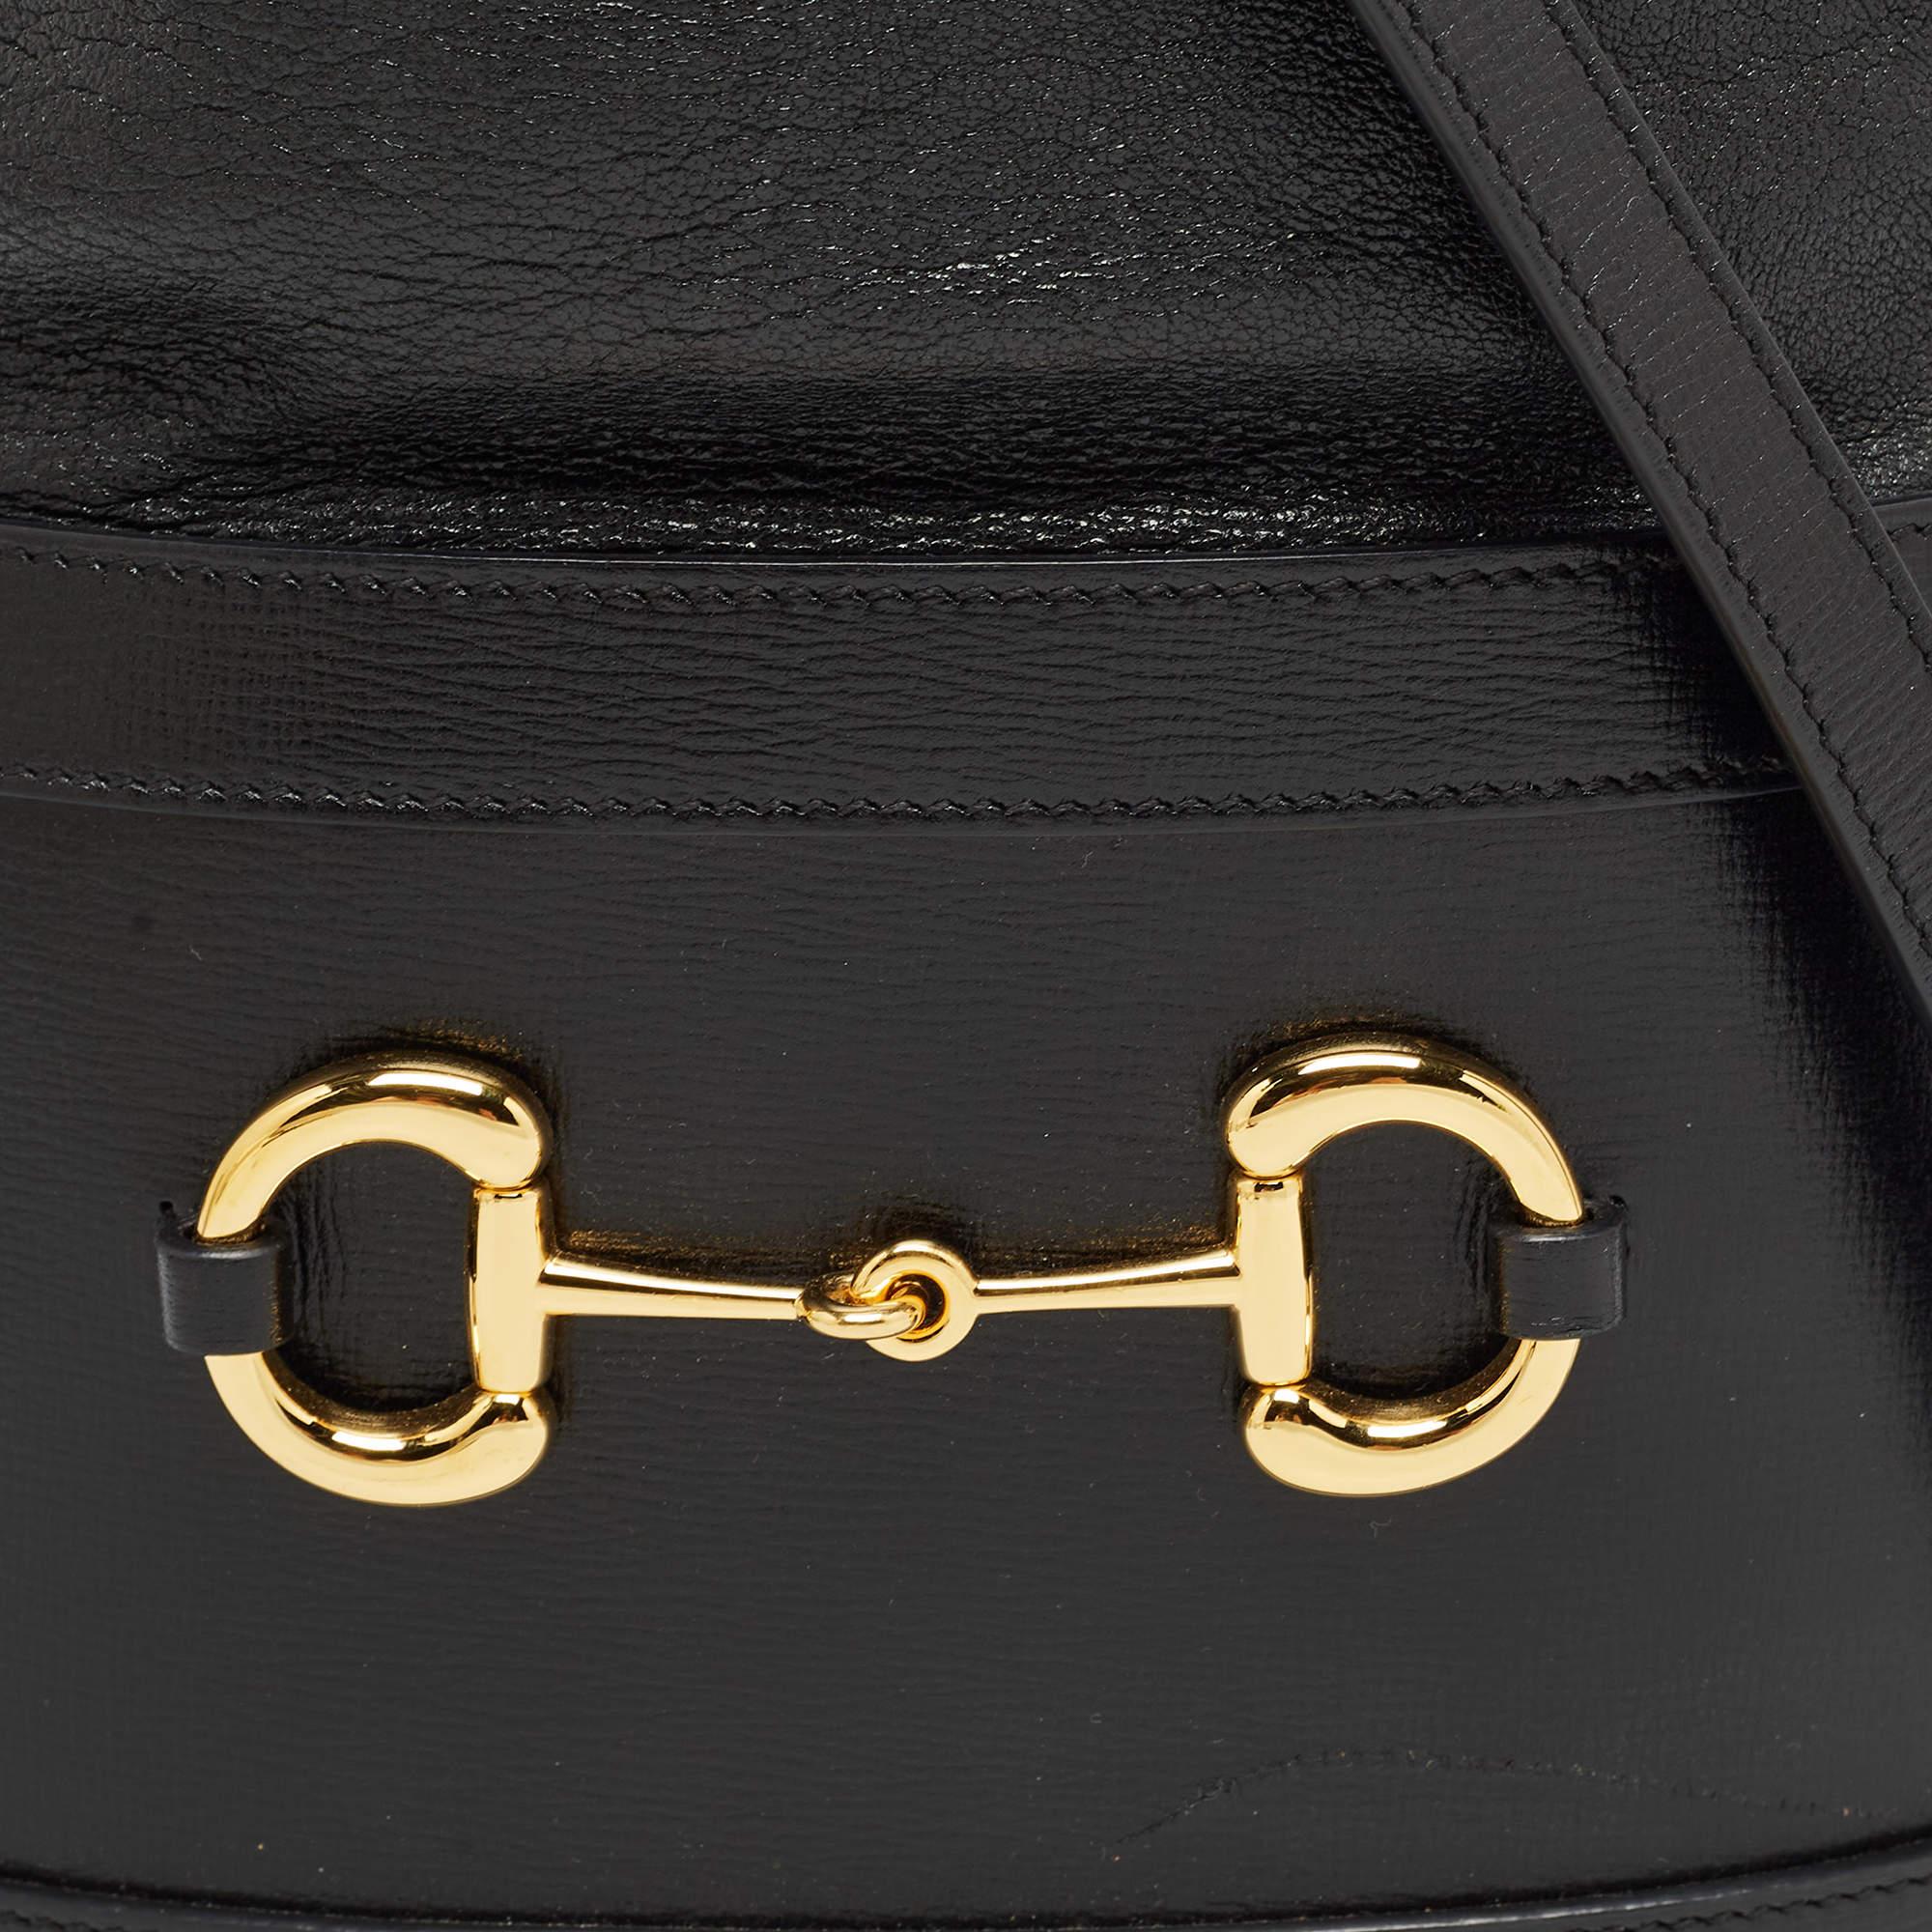 Gucci Black Leather 1955 Horsebit Bucket Bag 3